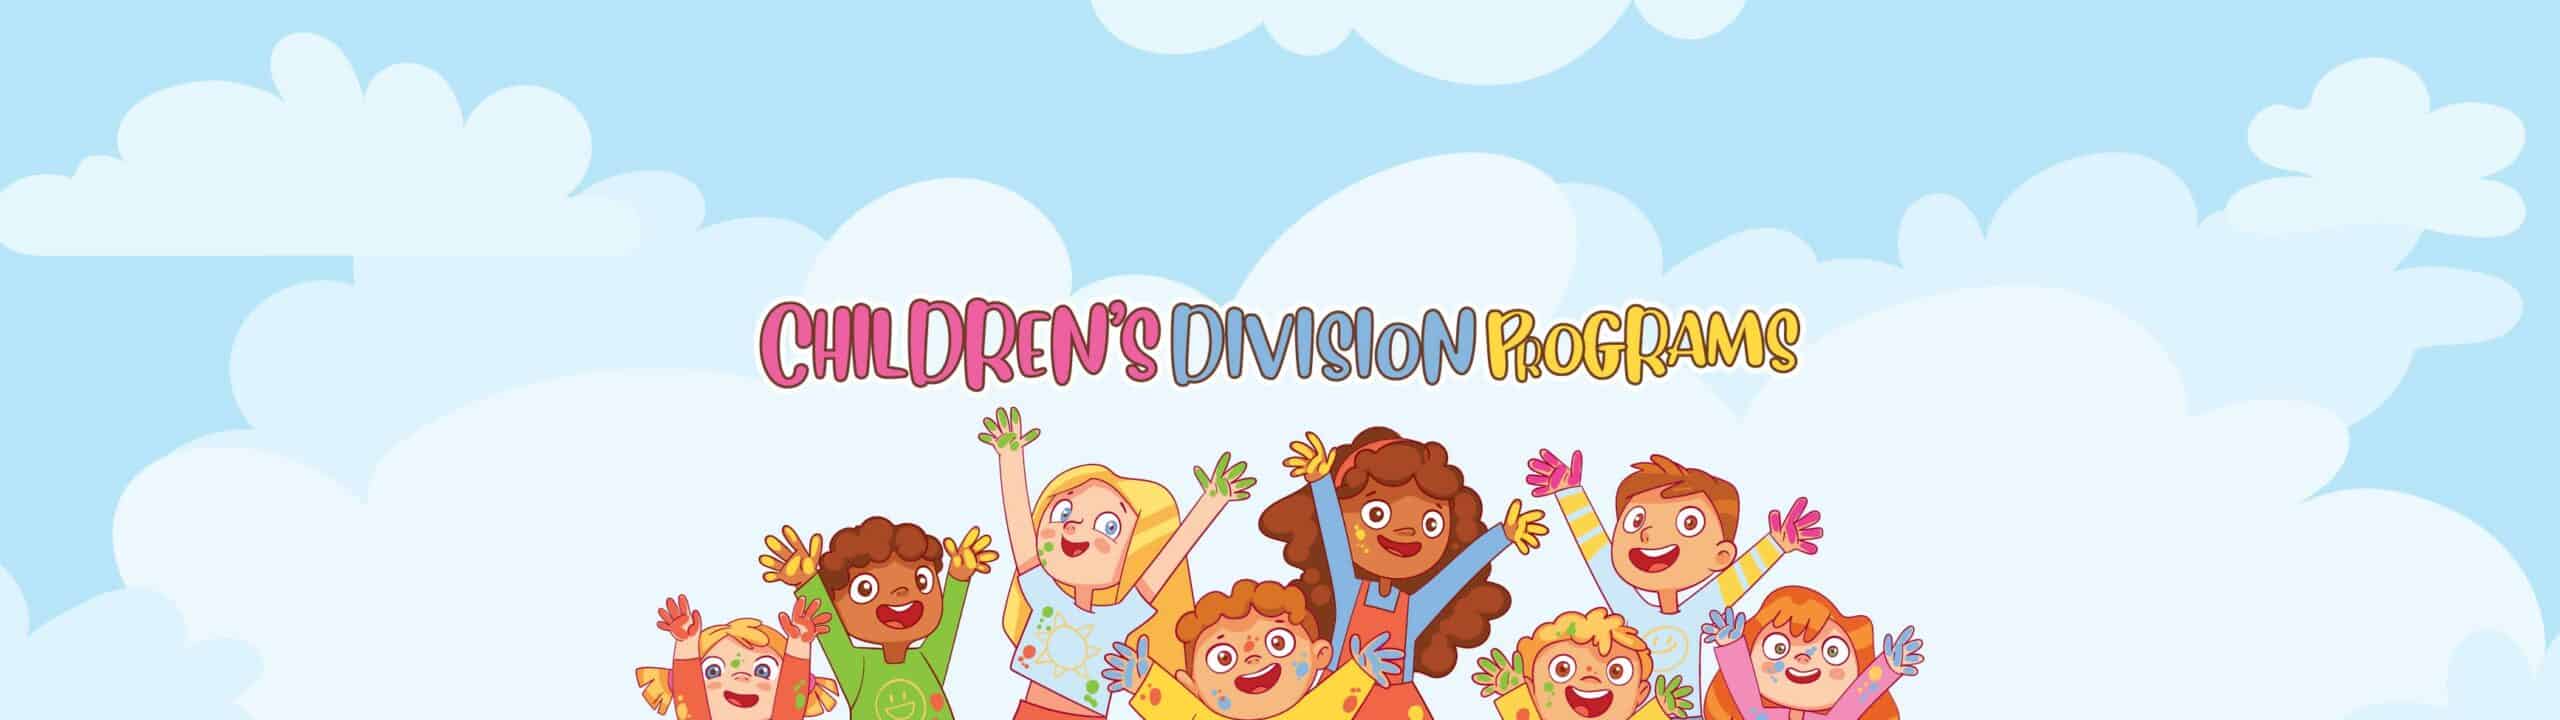 Children's Division Programs